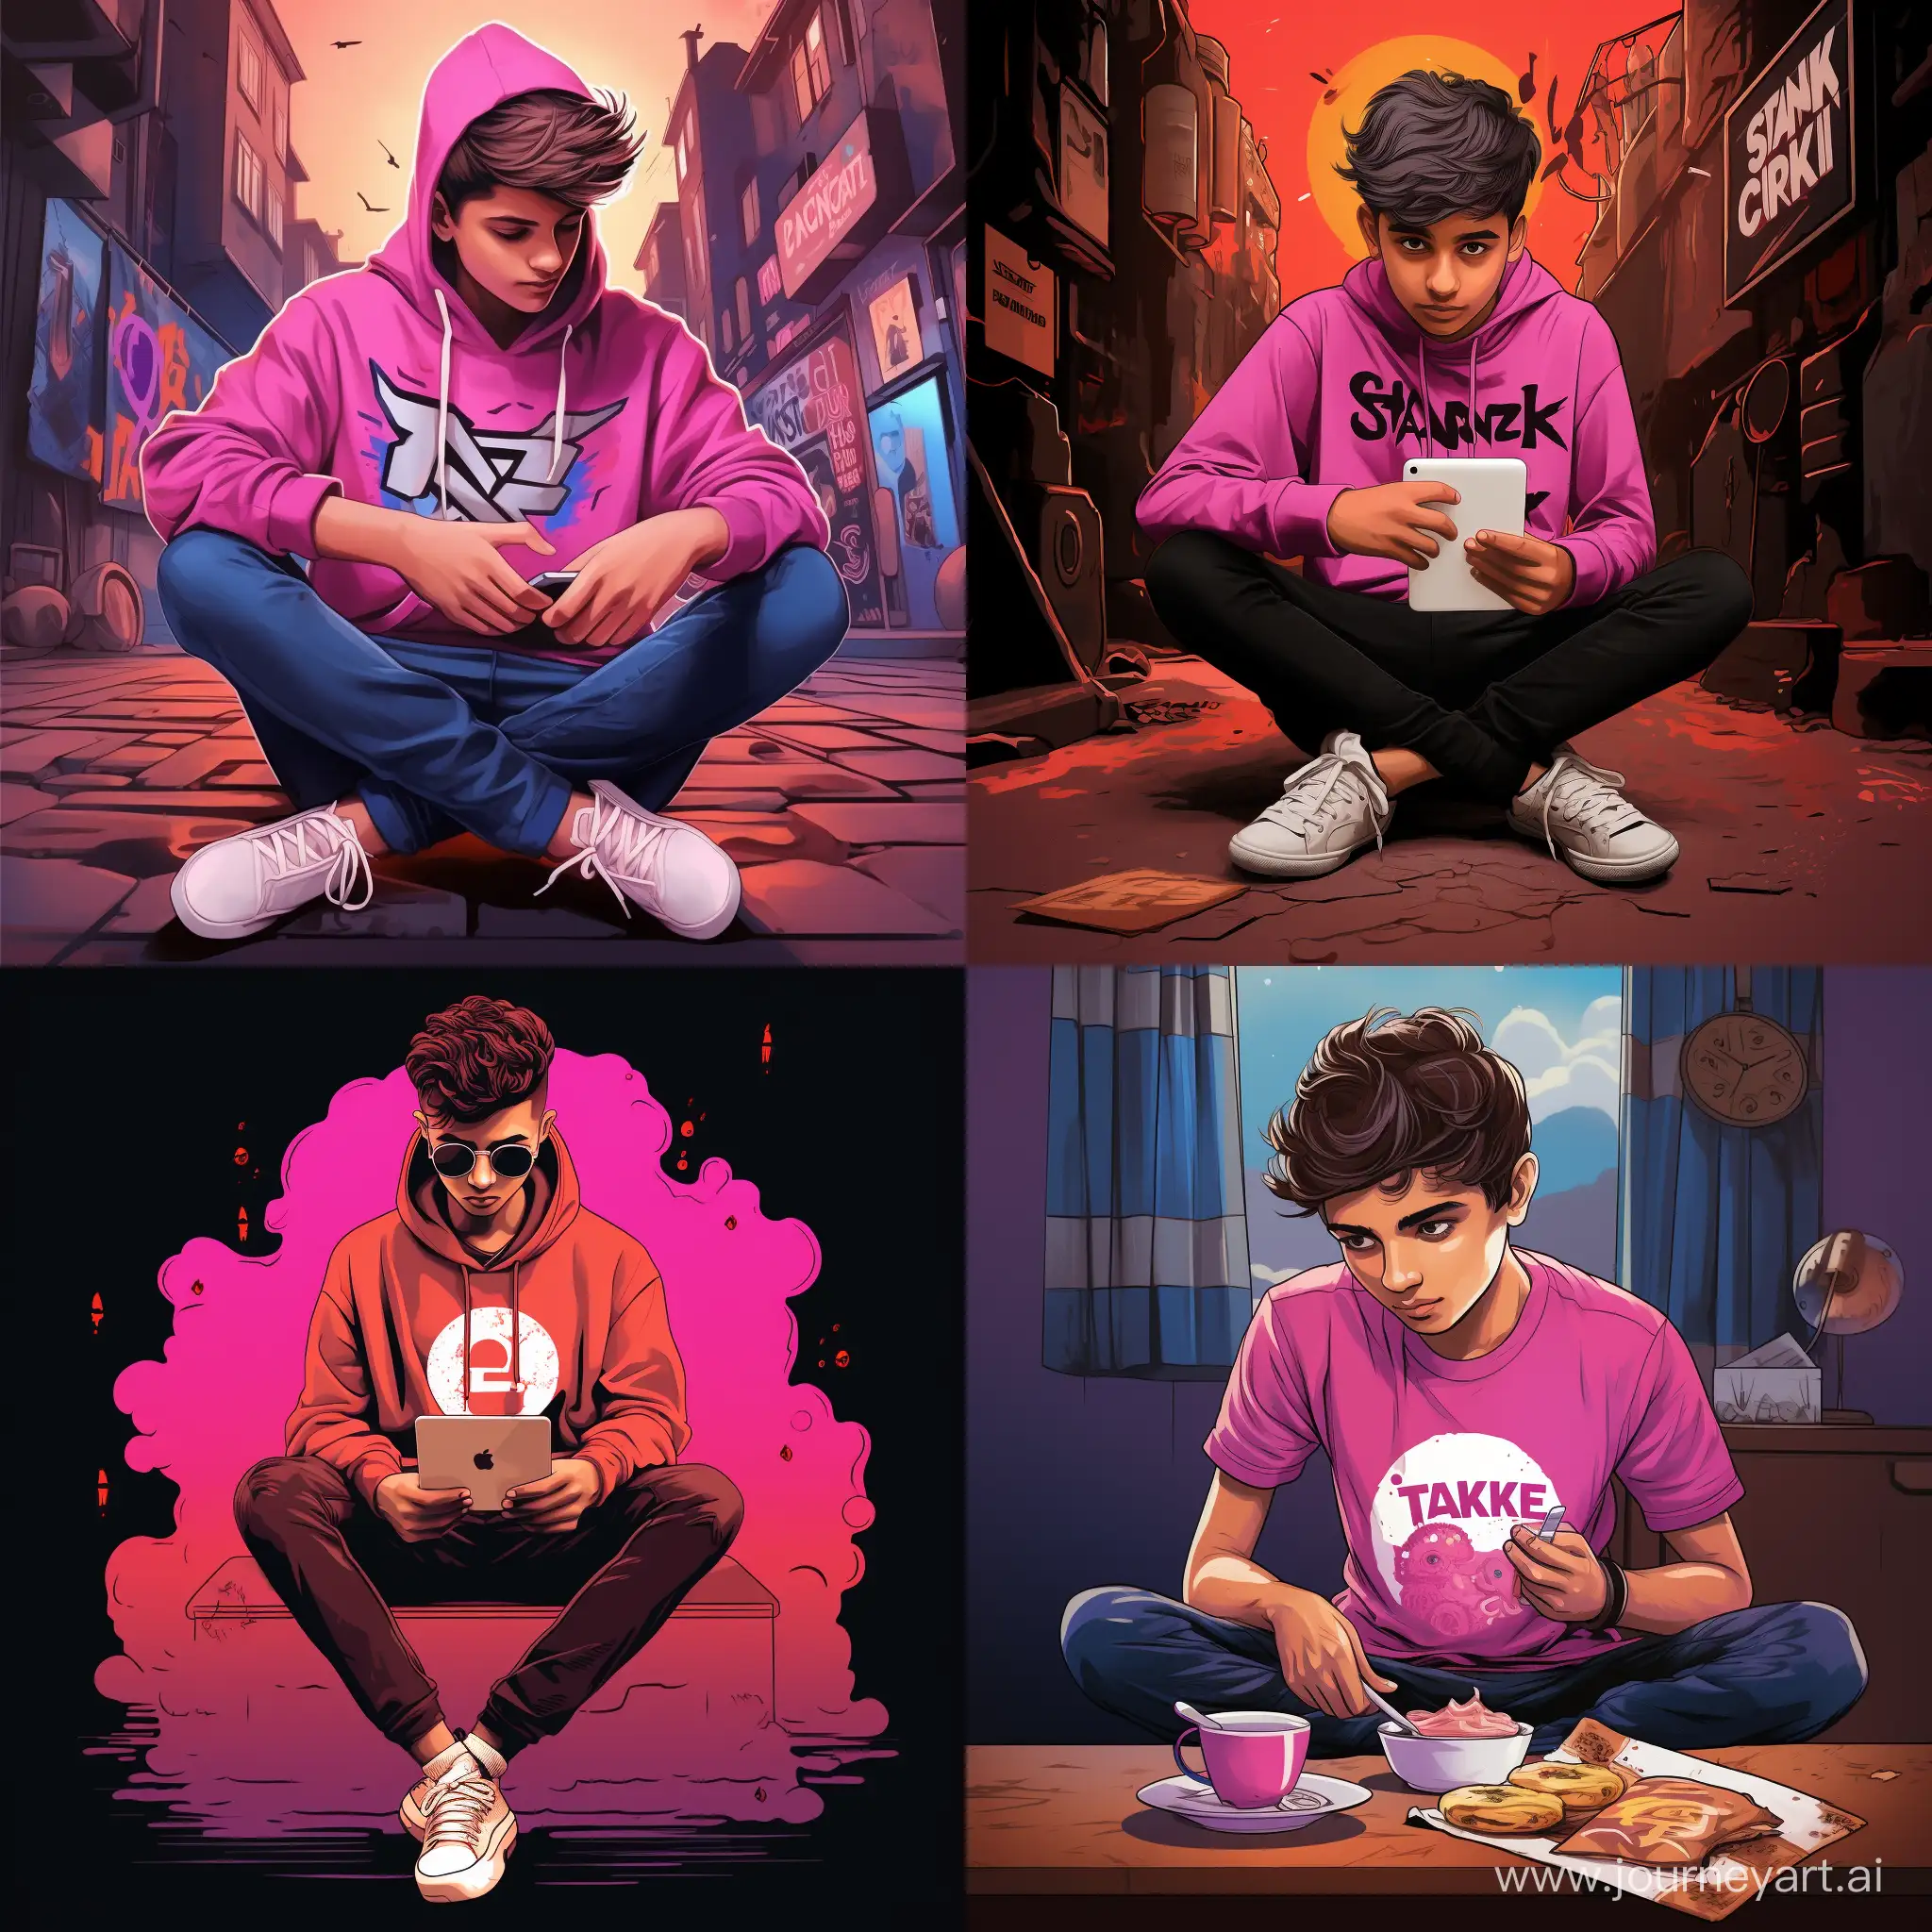 Teenager-Boy-Sitting-on-Instagram-Logo-in-Pink-Sanket-TShirt